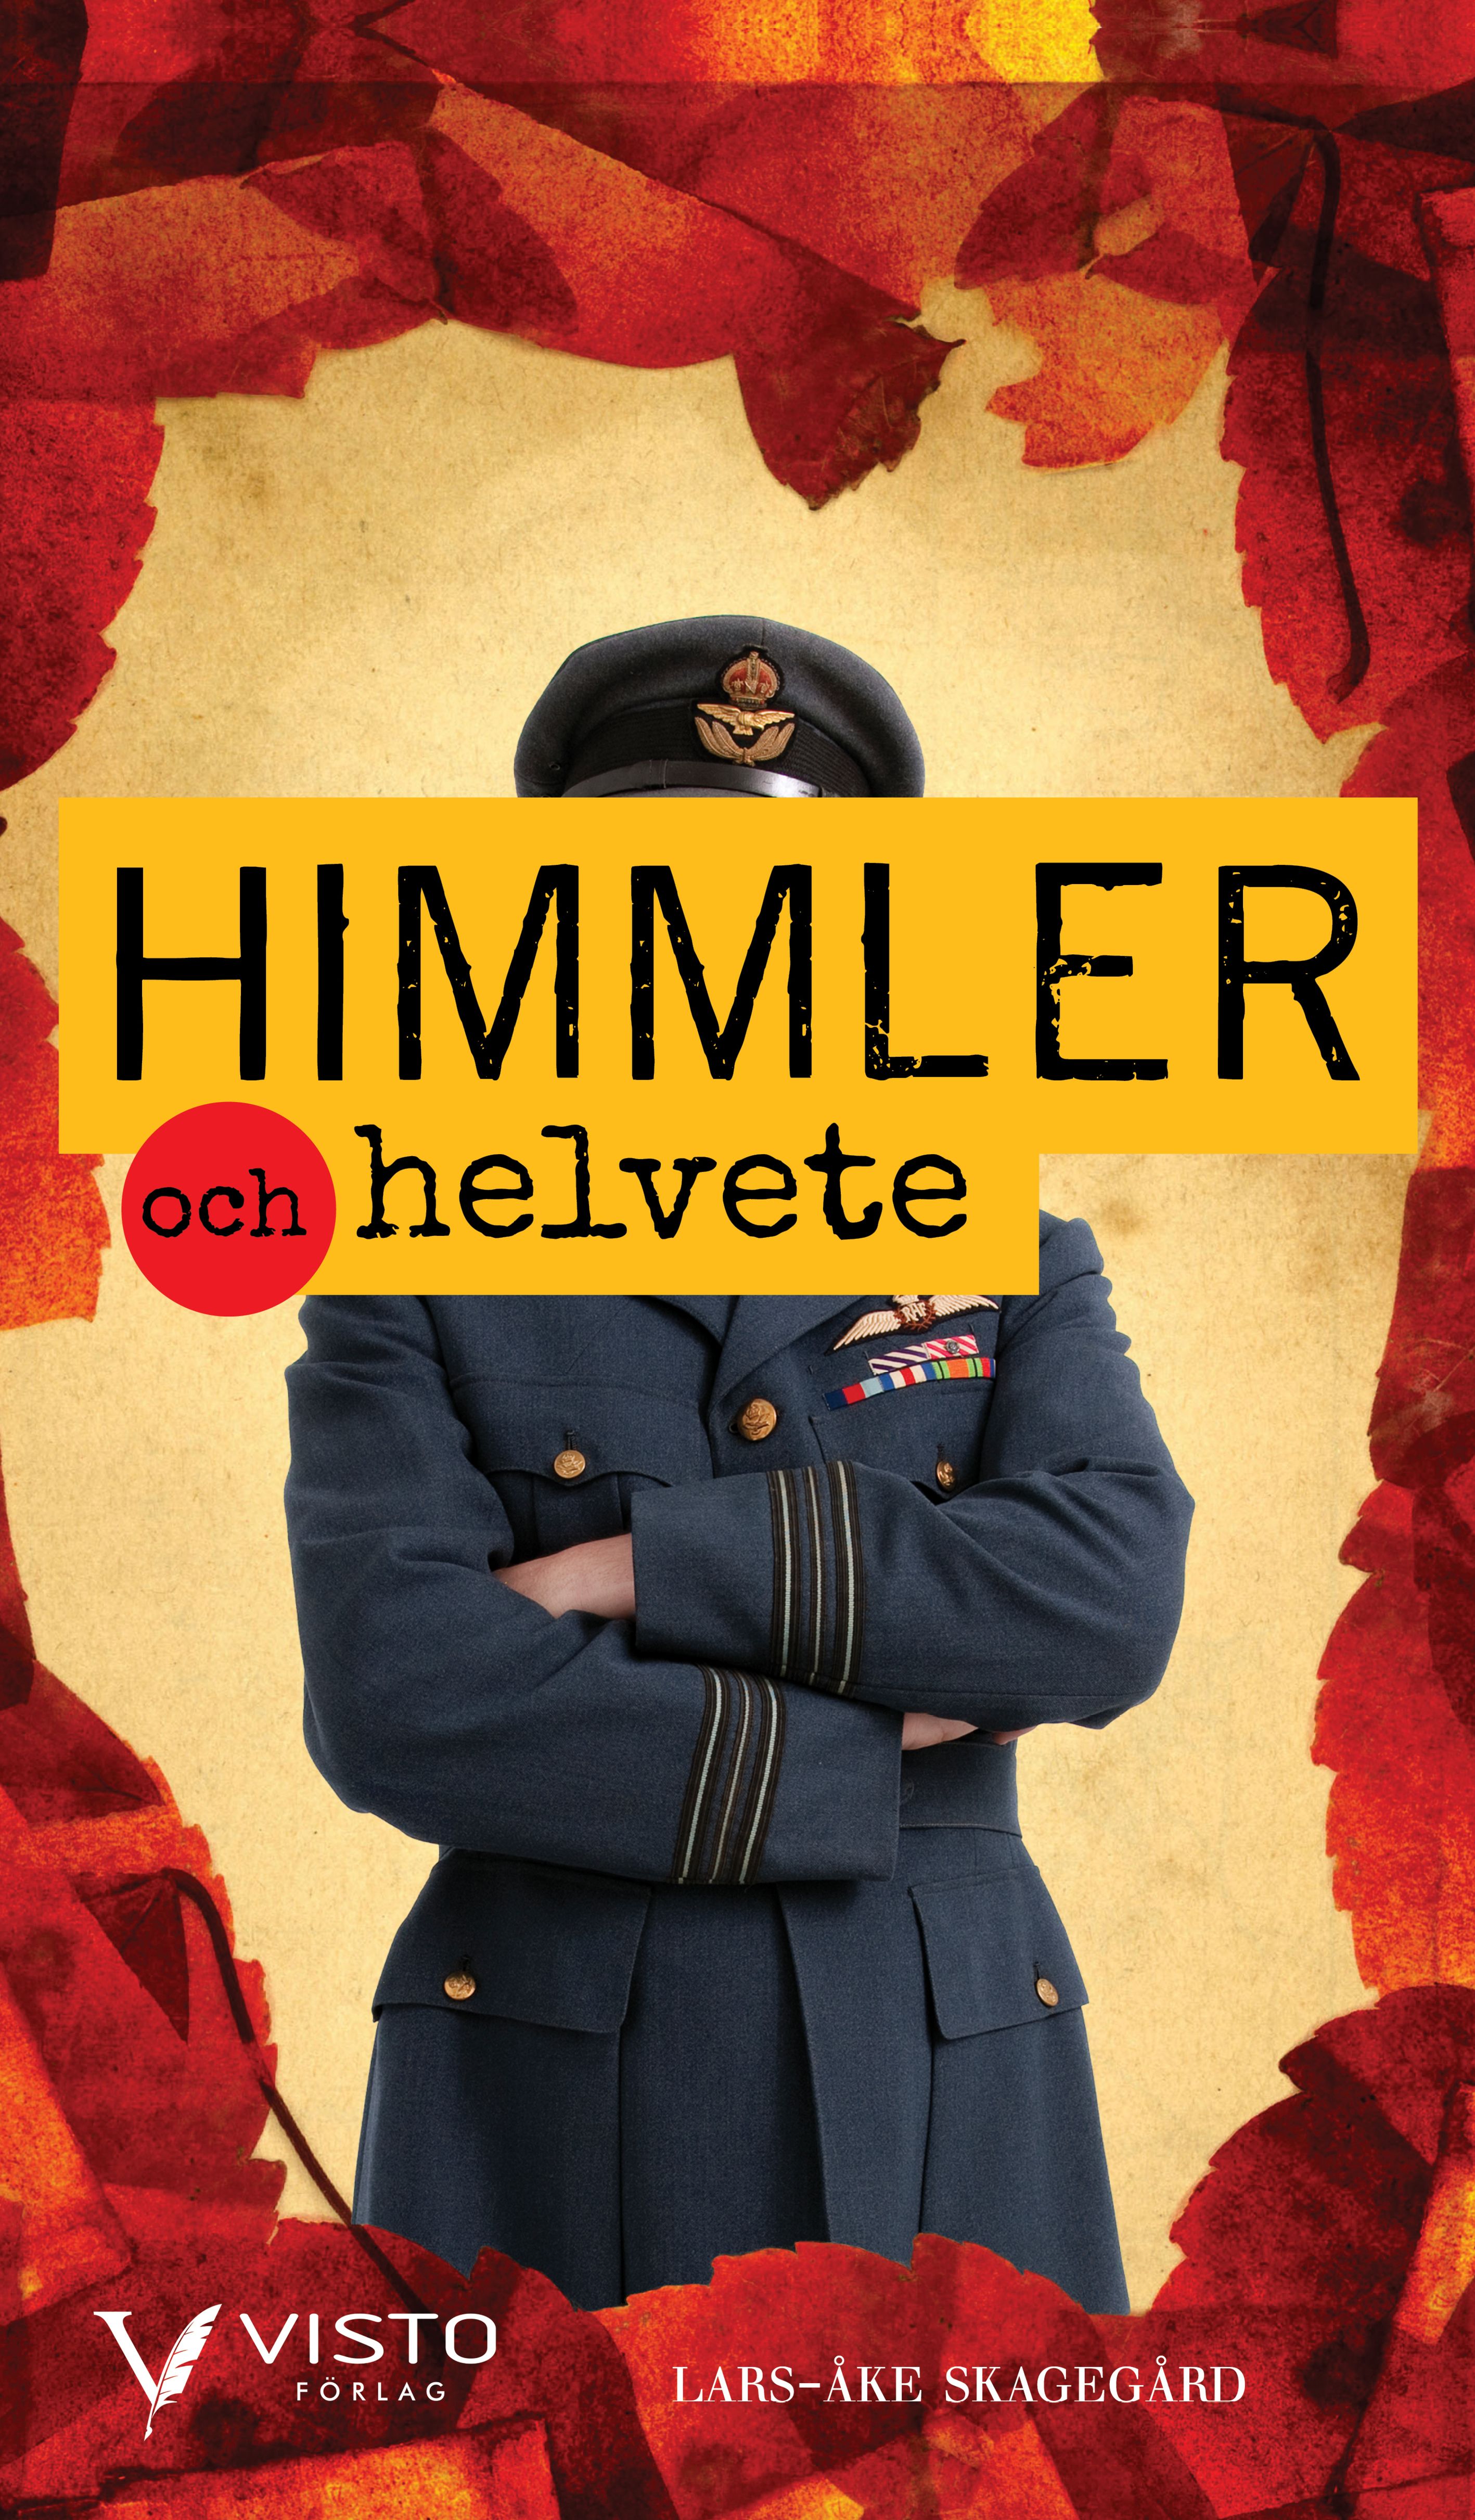 Himmler och helvete, e-bog af Lars-Åke Skagegård